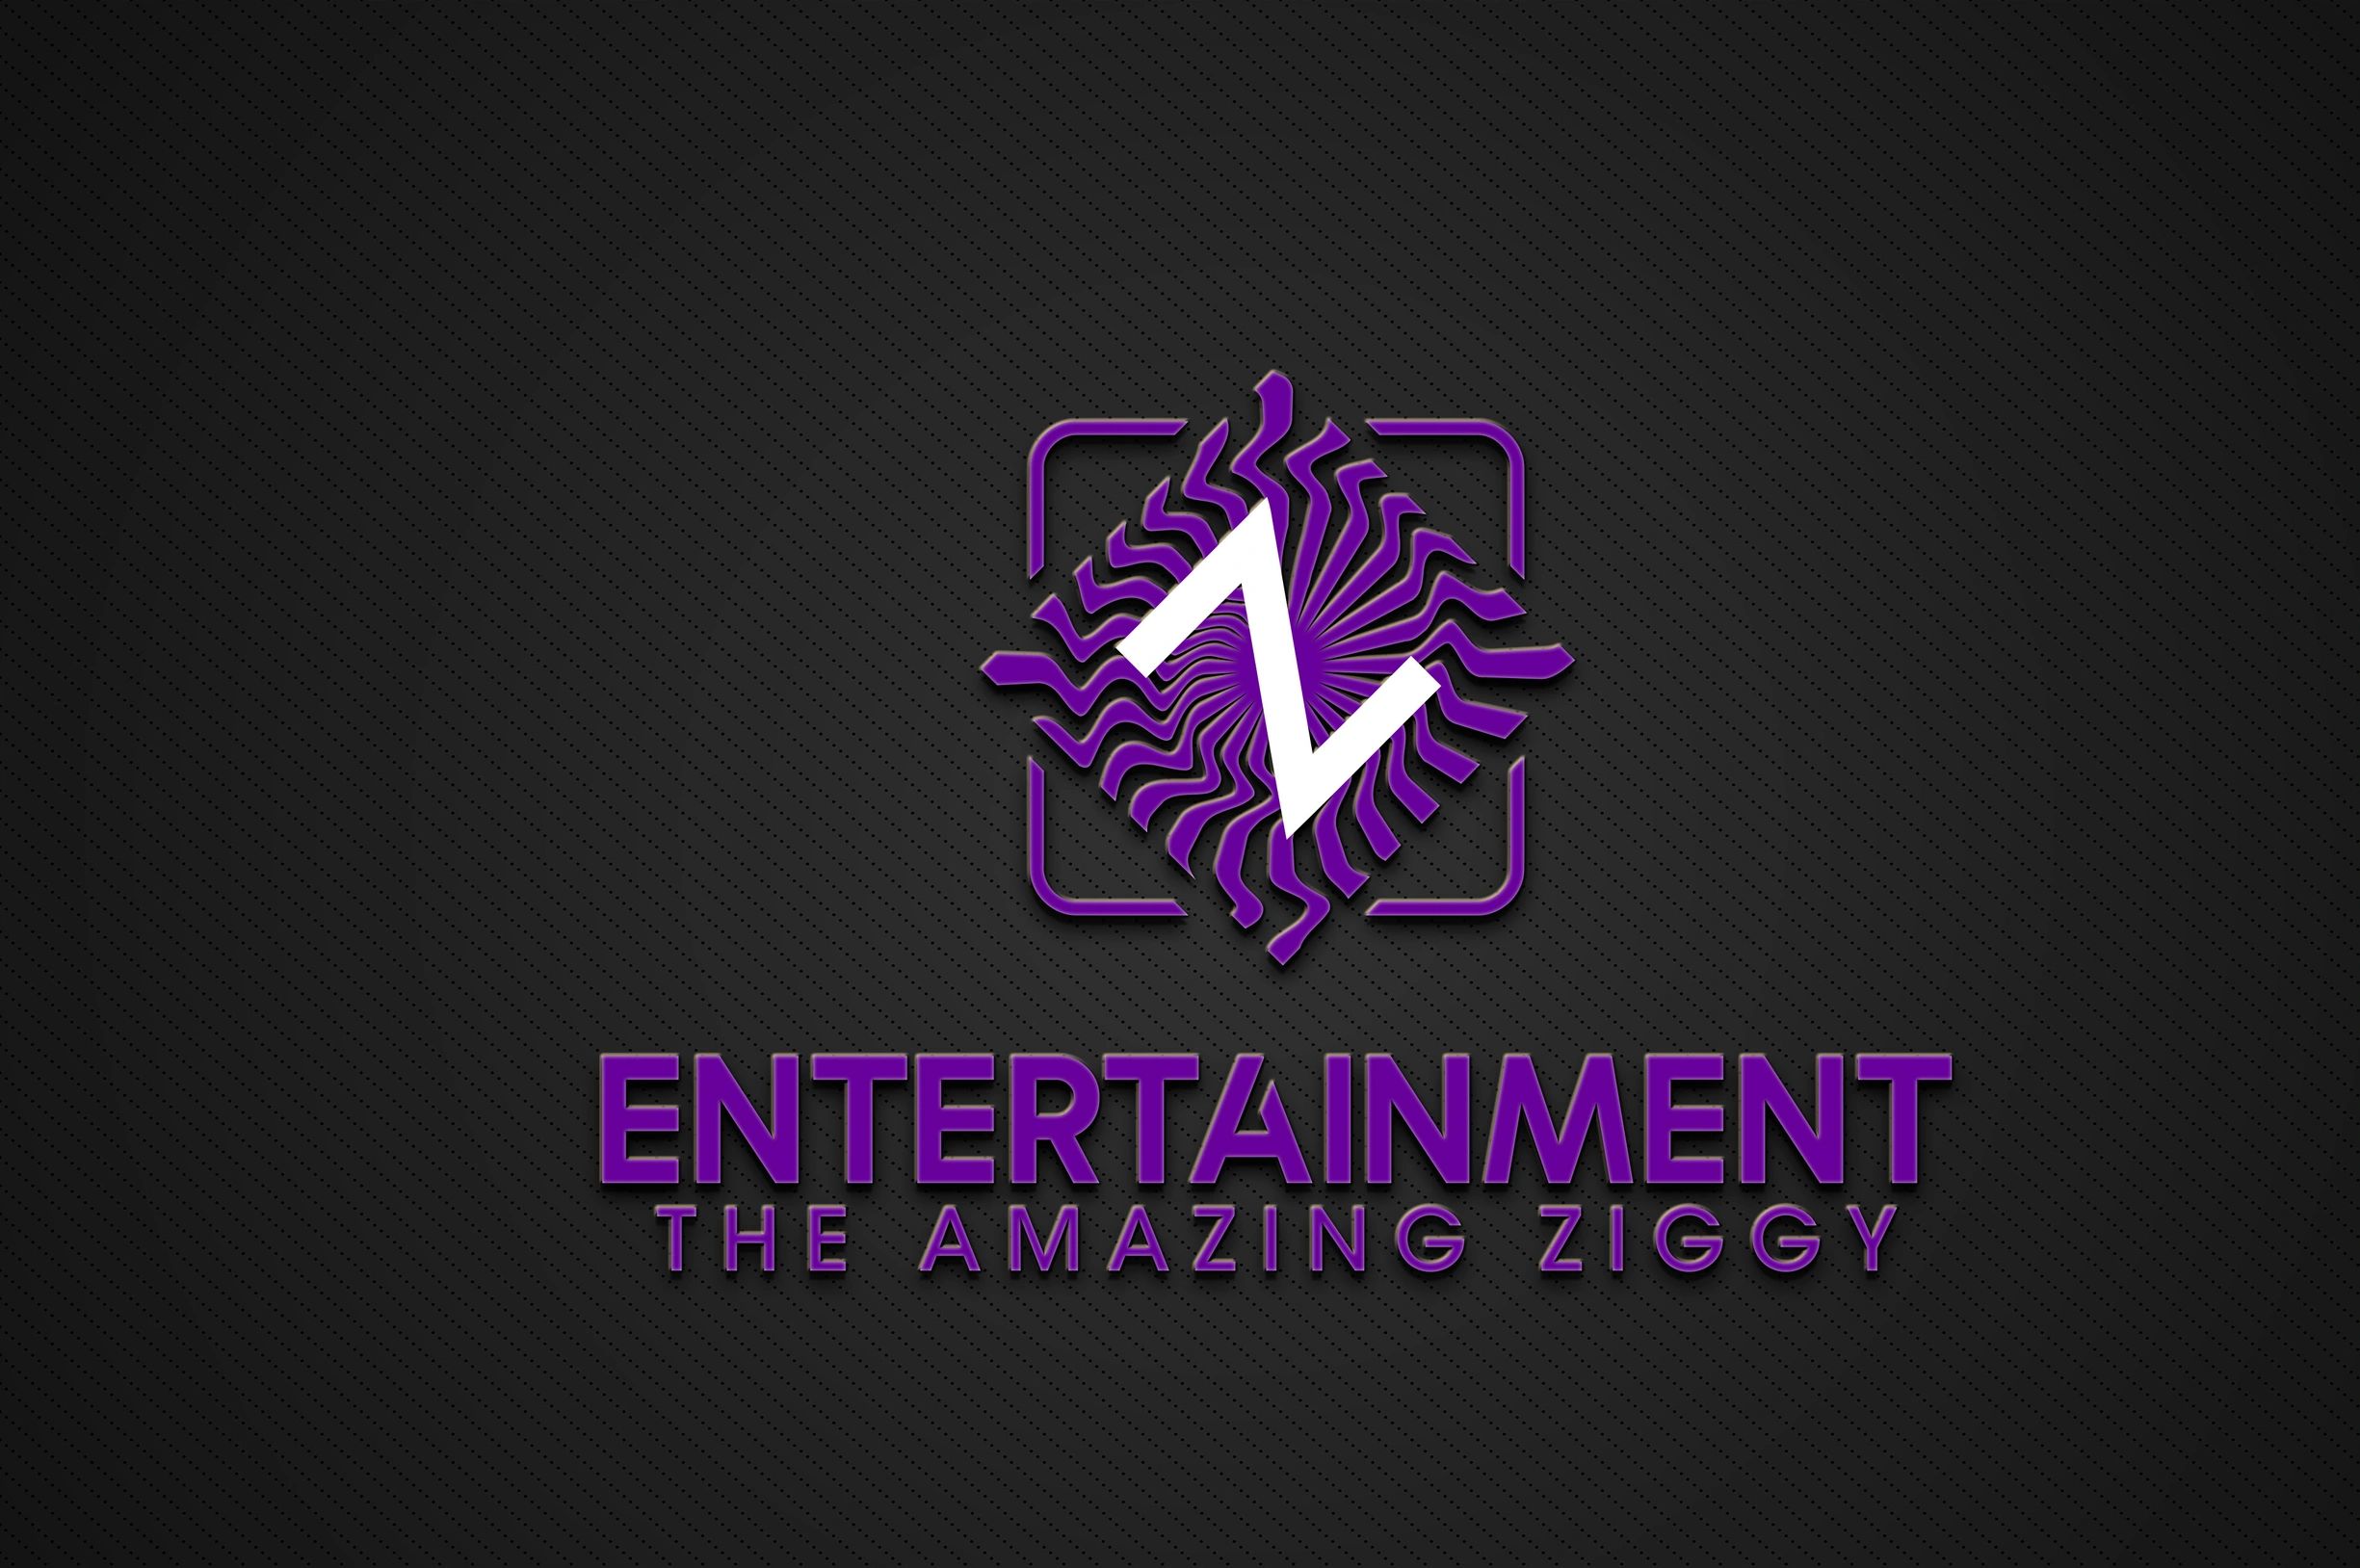 Z Entertainment Logo - The Amazing Ziggy
Magic Show, DJ Services, Fire Performance 
Atlanta, GA